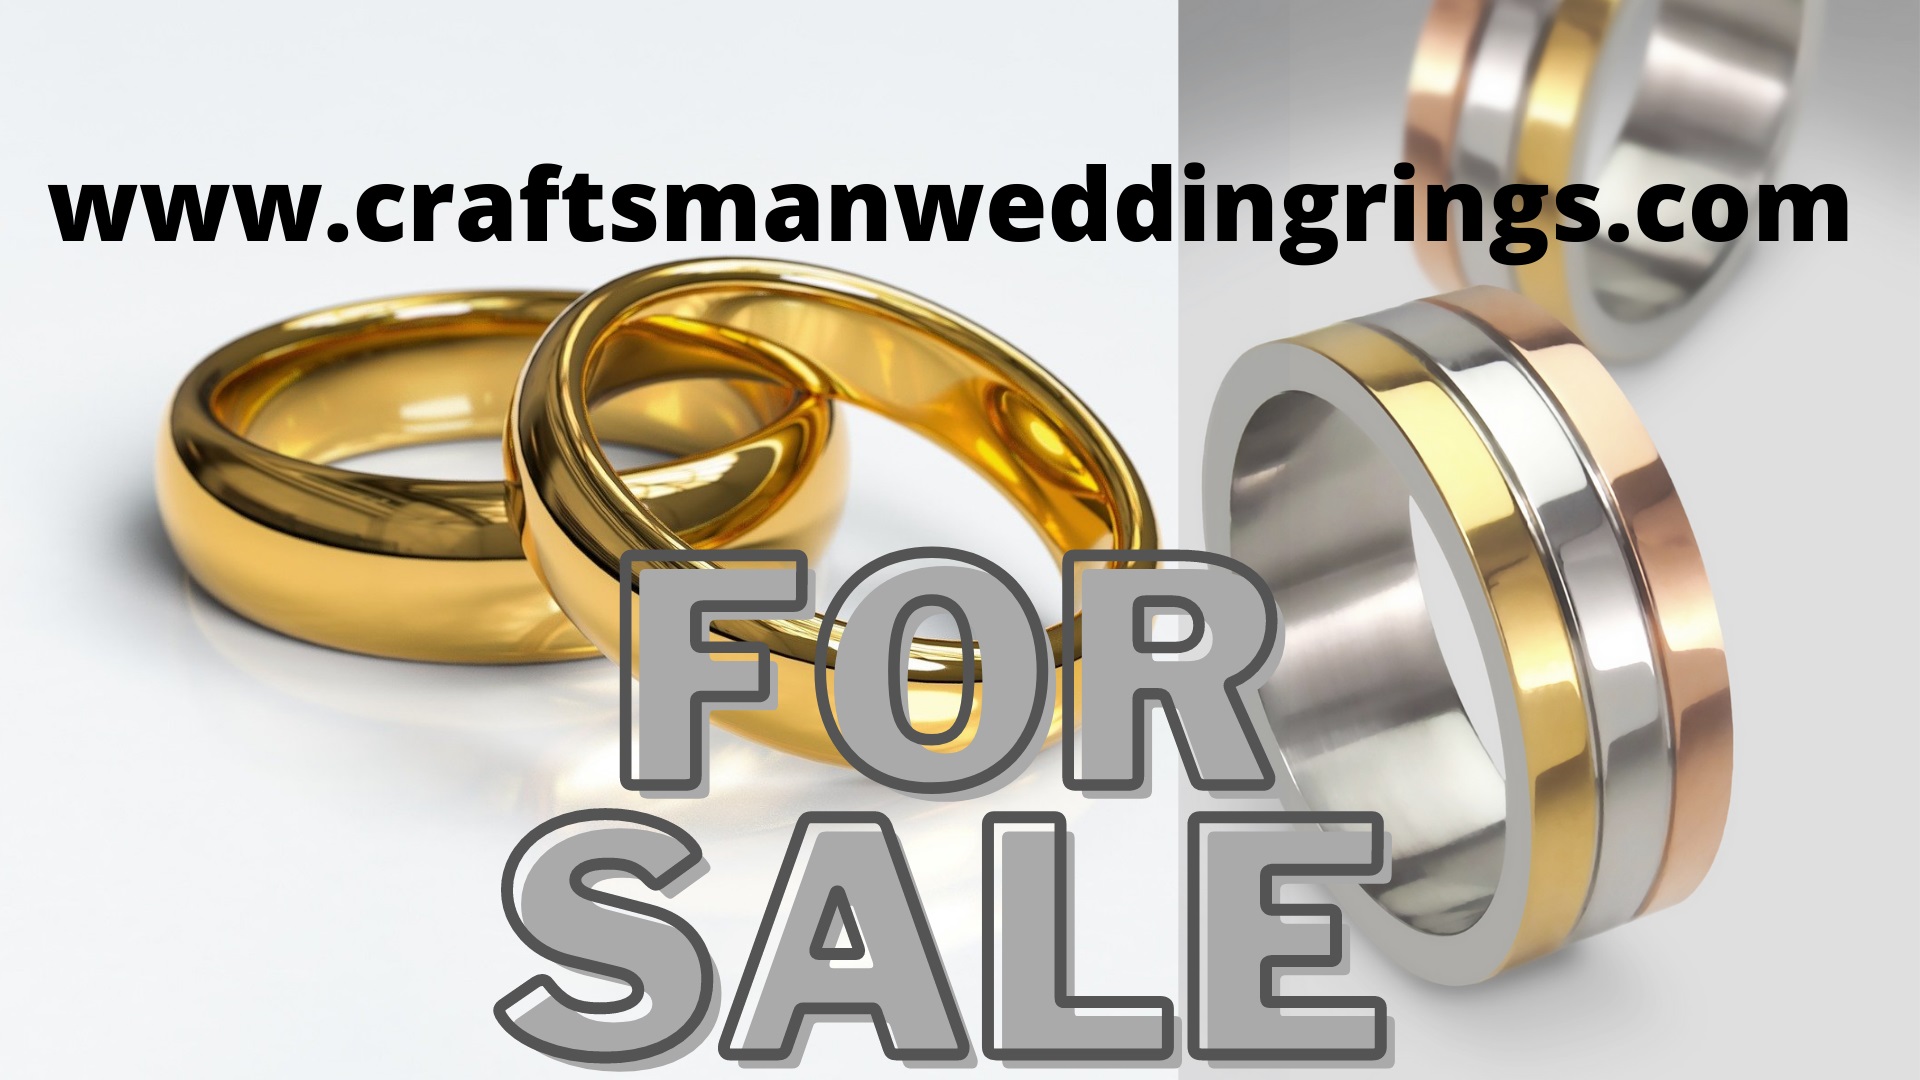 various craftsman made wedding rings advertising domain for sale craftsmanweddingrings.com 